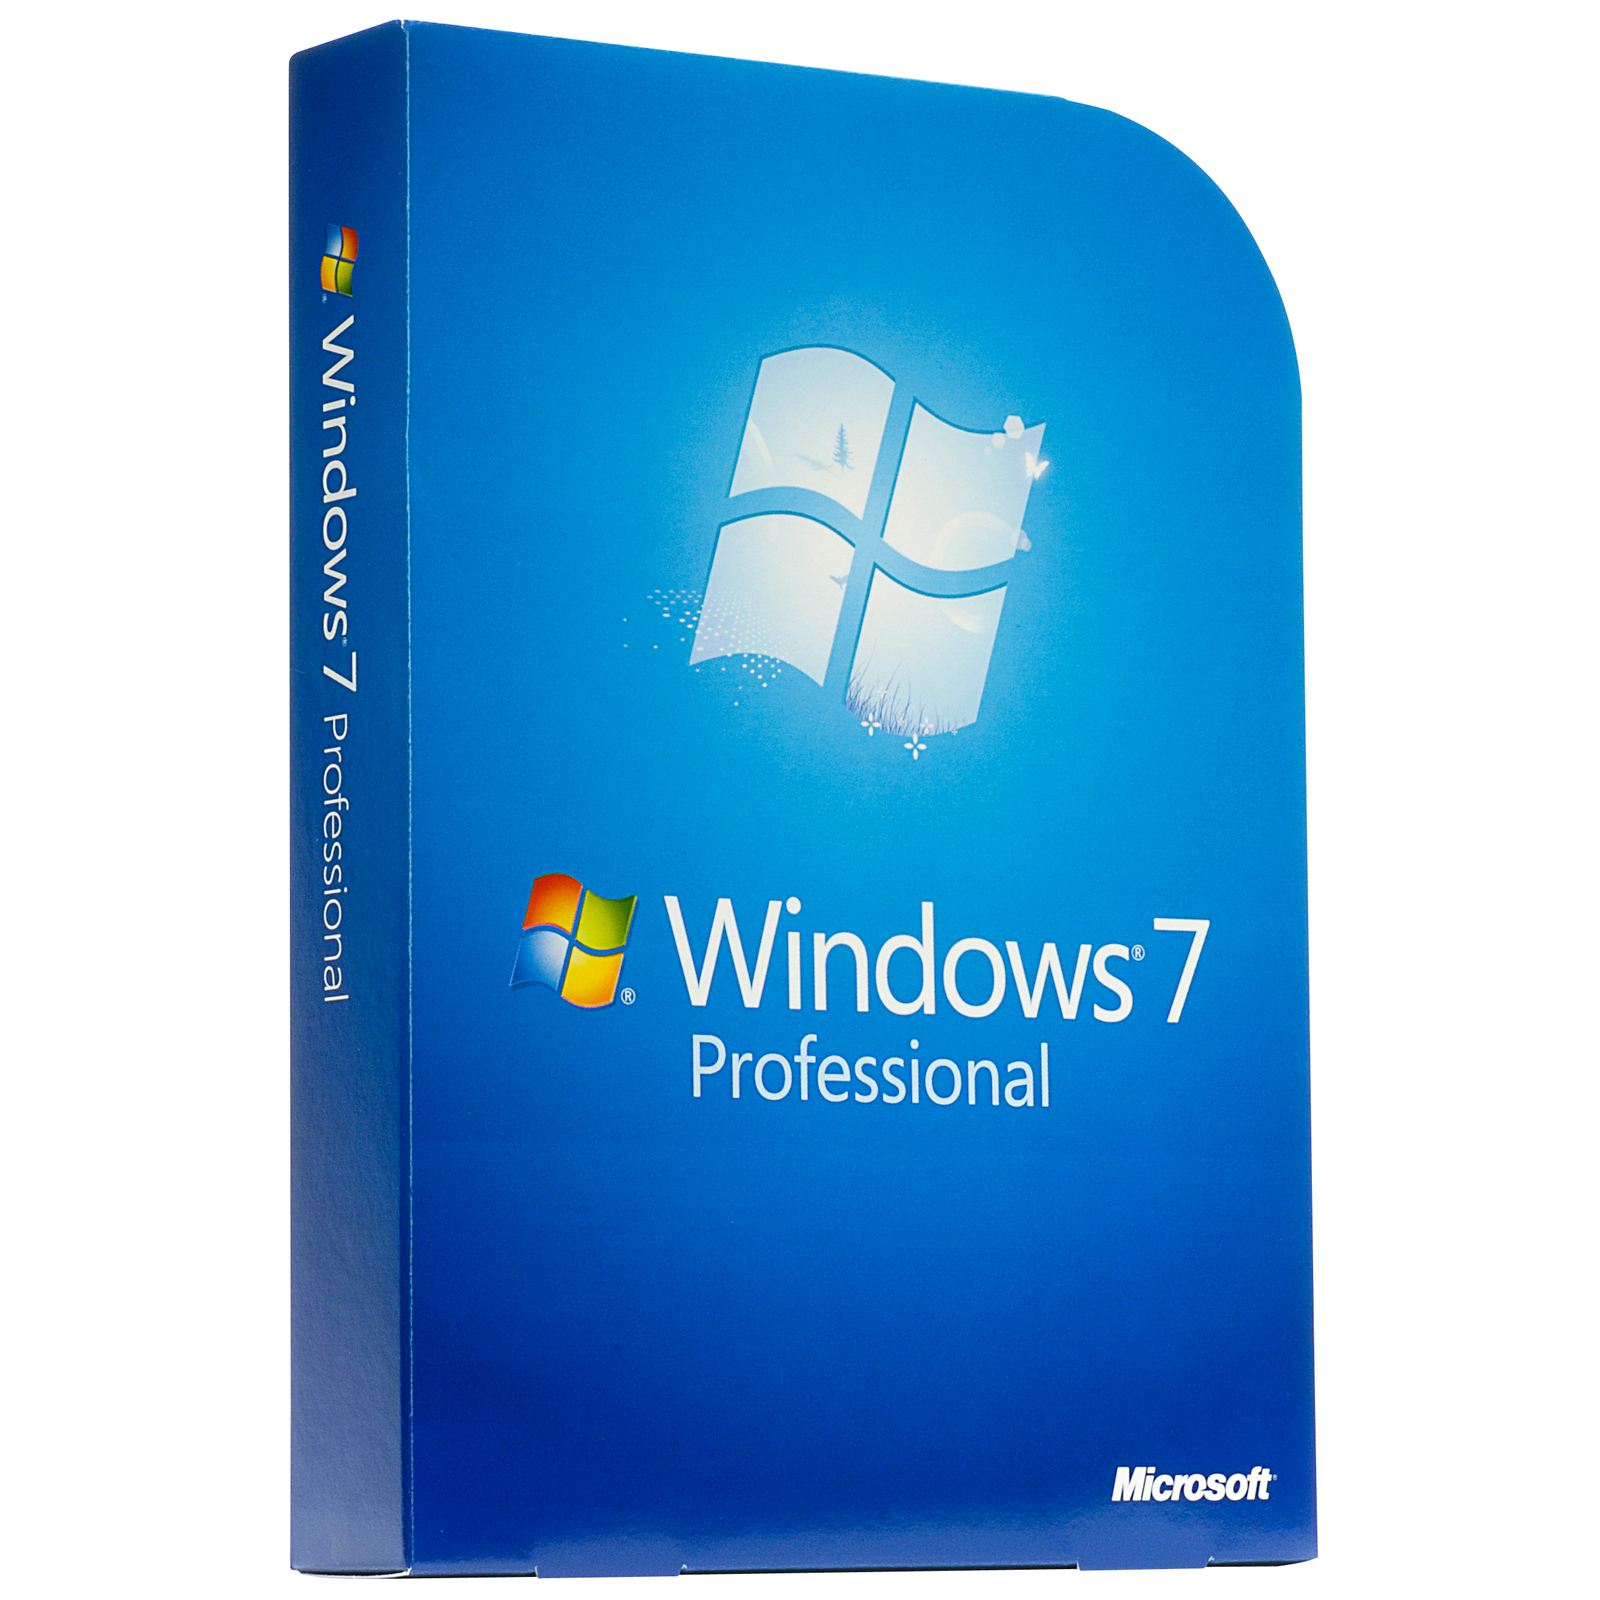 download windows 7 iso file 64 bit microsoft